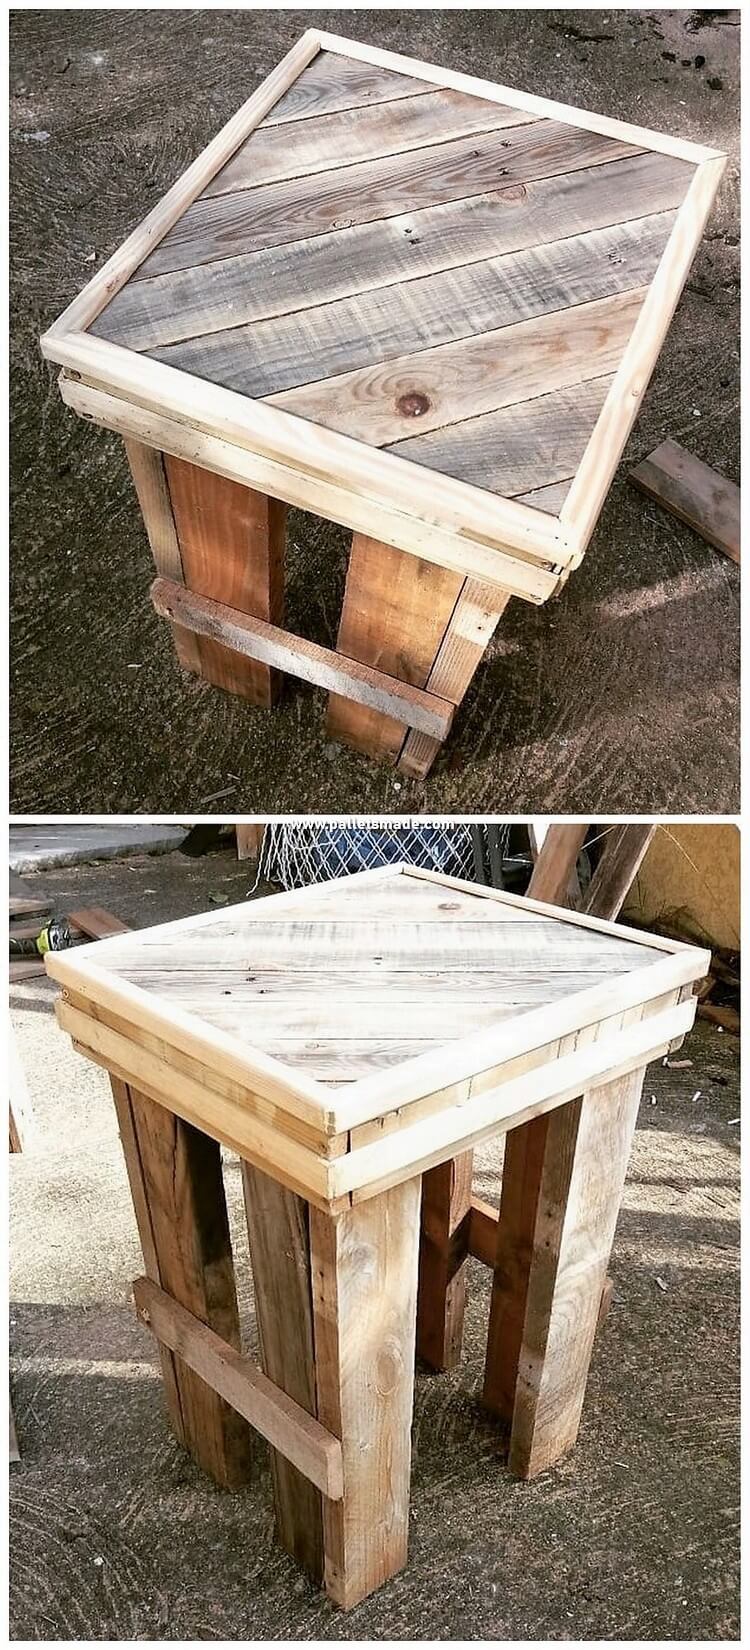 Wooden Pallet Table Idea